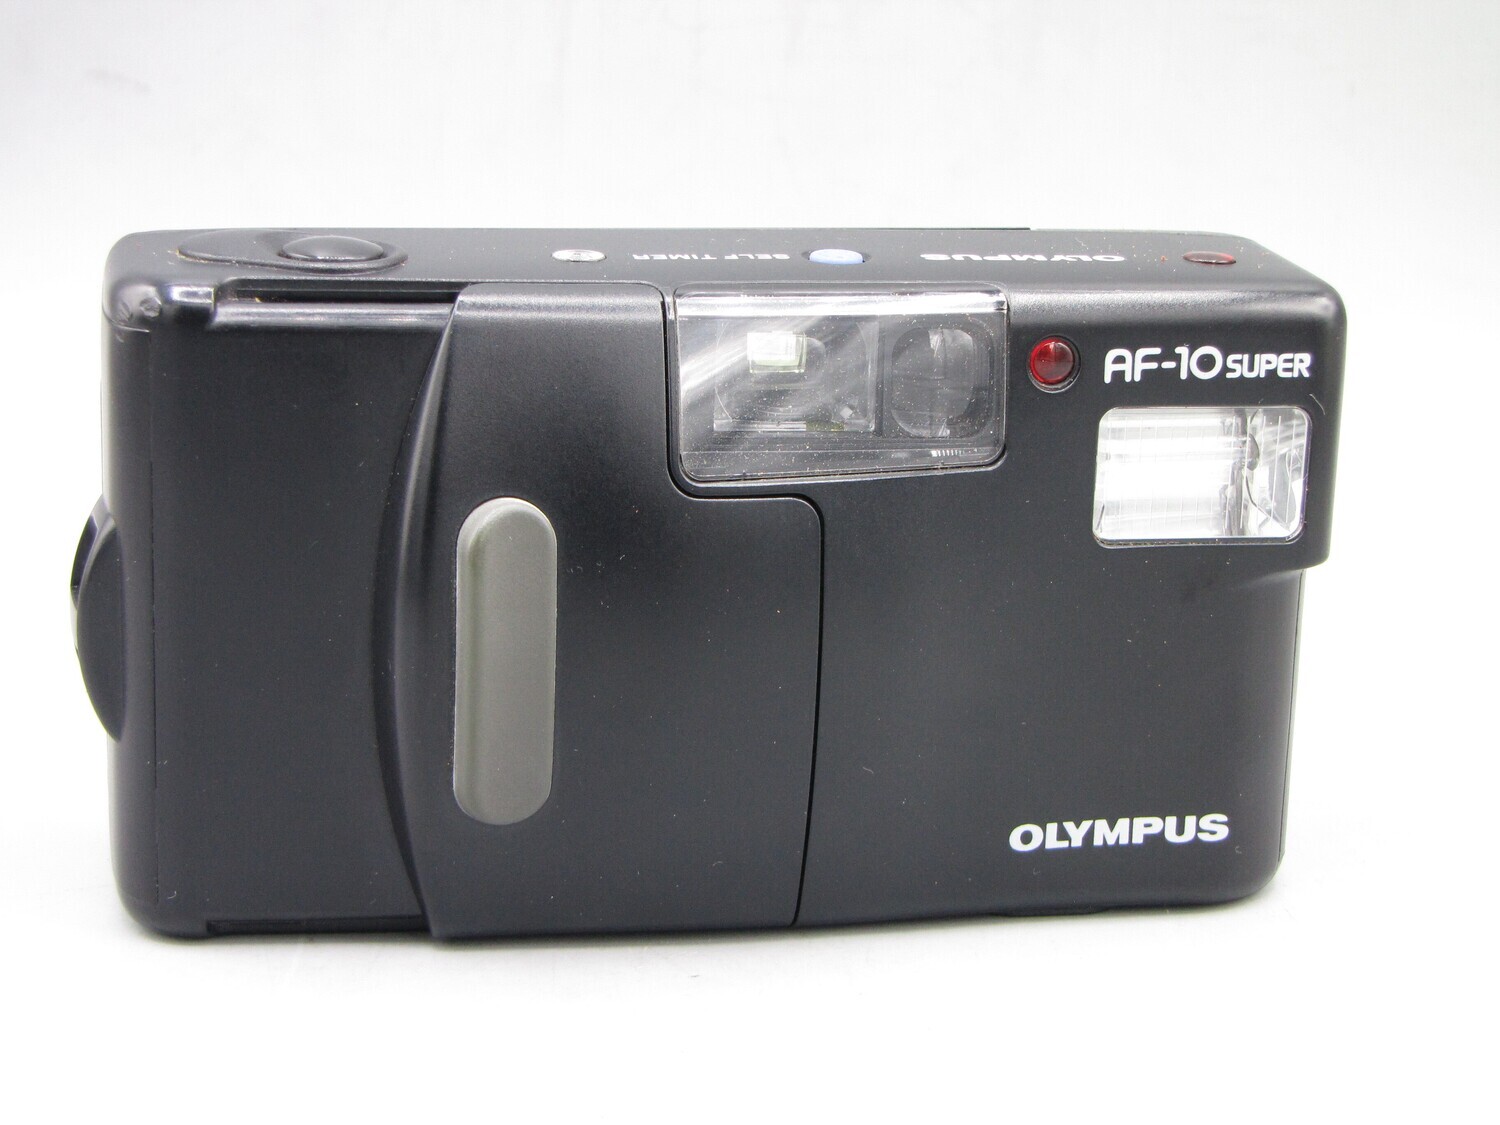 Olympus AF-10 Super P&S Camera Fully Working